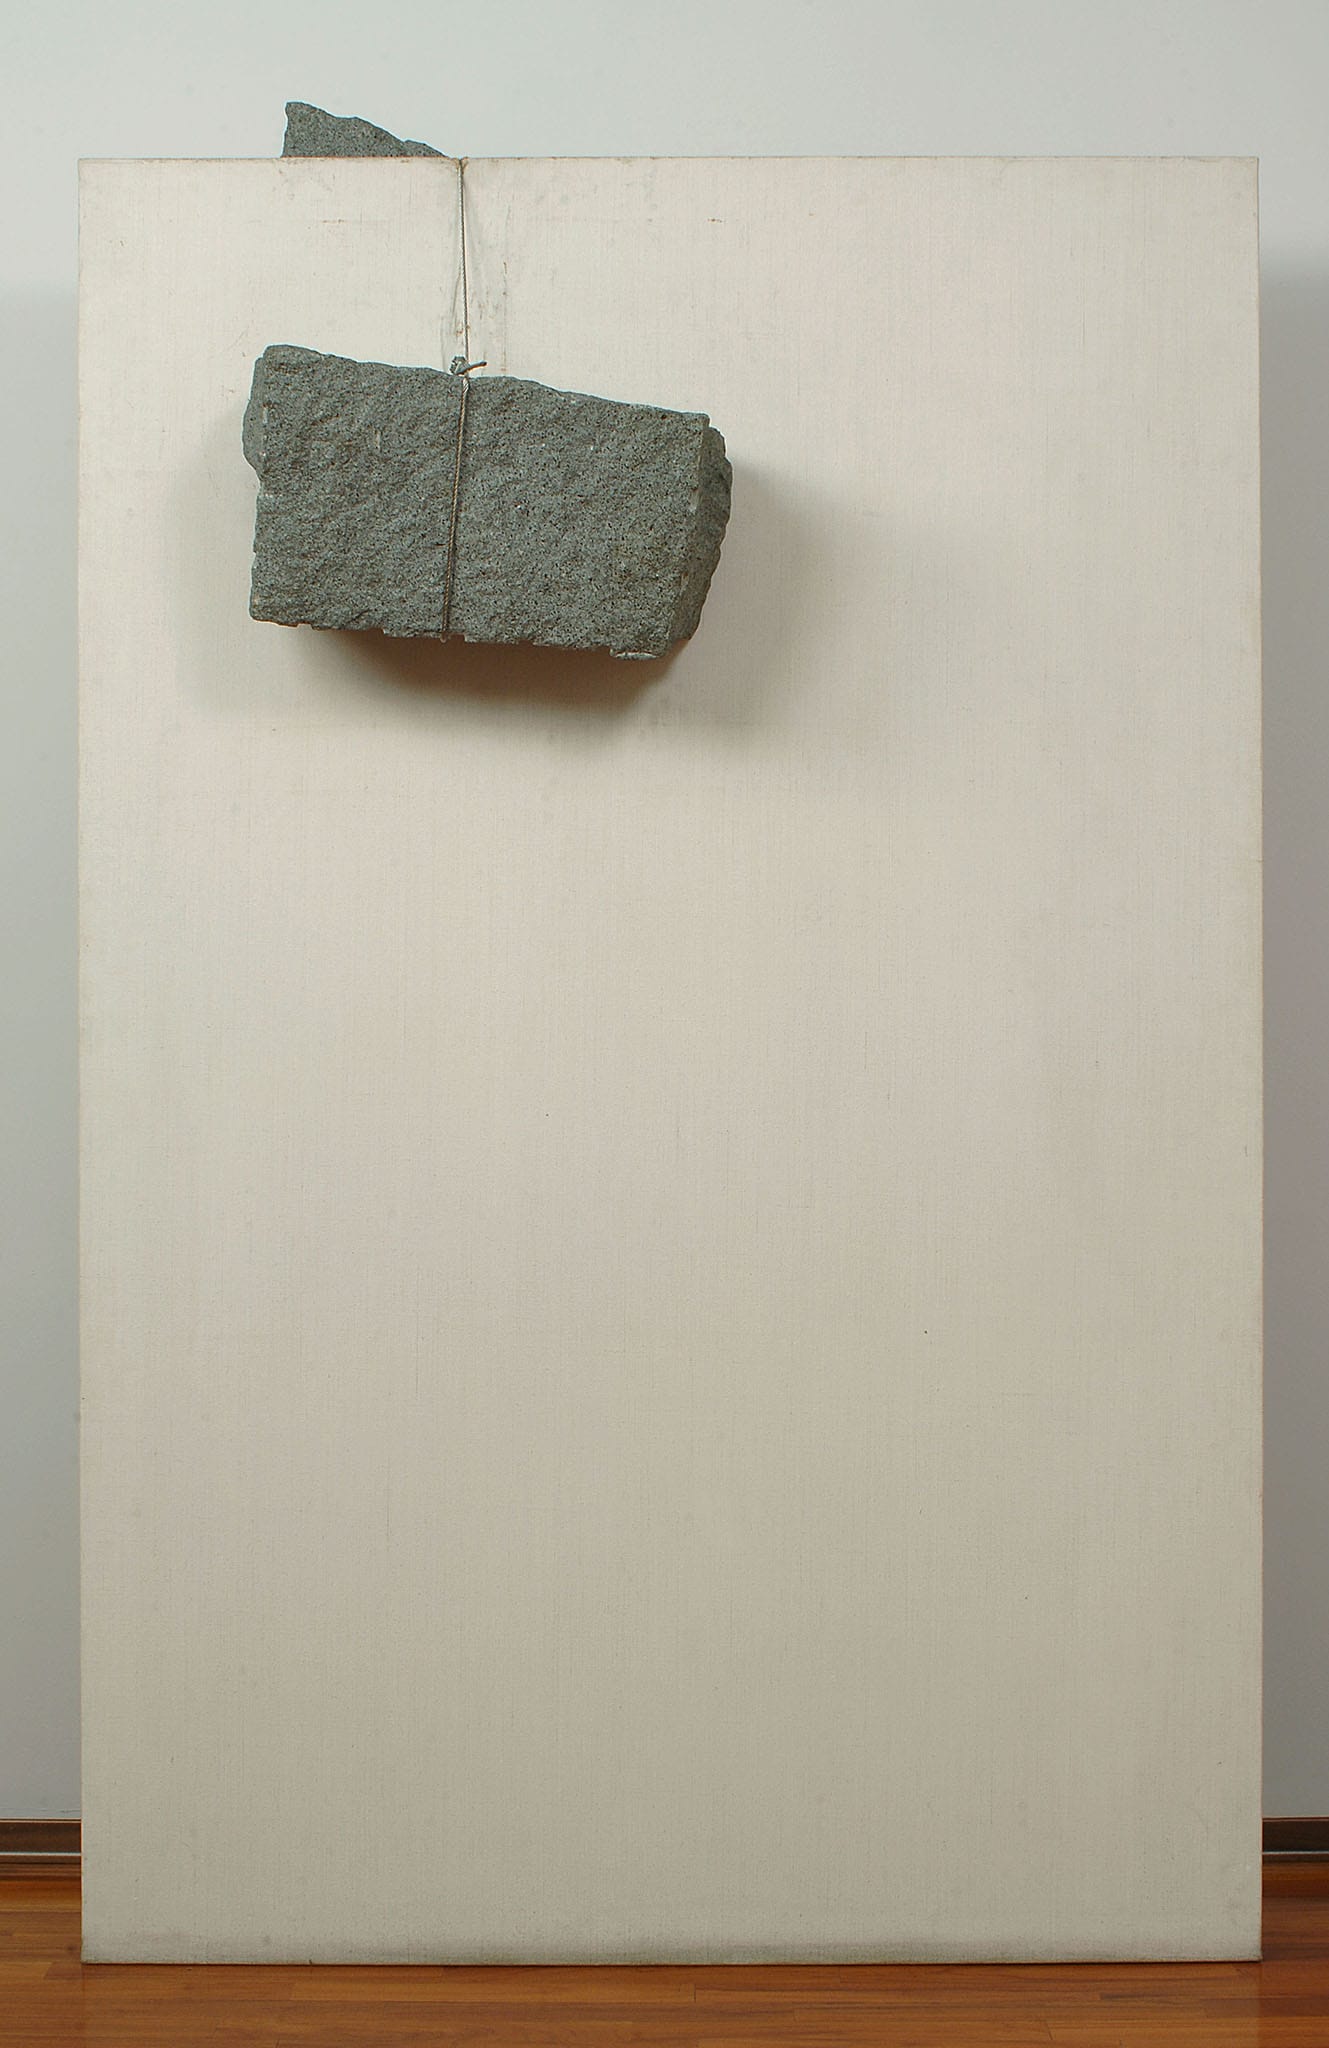 Giovanni Anselmo - Senza titolo, 1984-1986 - tela, pietre, cavo d'acciaio e nodo scorsoio, cm 230 x 150 x 80 - GAM - Galleria Civica d'Arte Moderna o Contemporanea, Torino